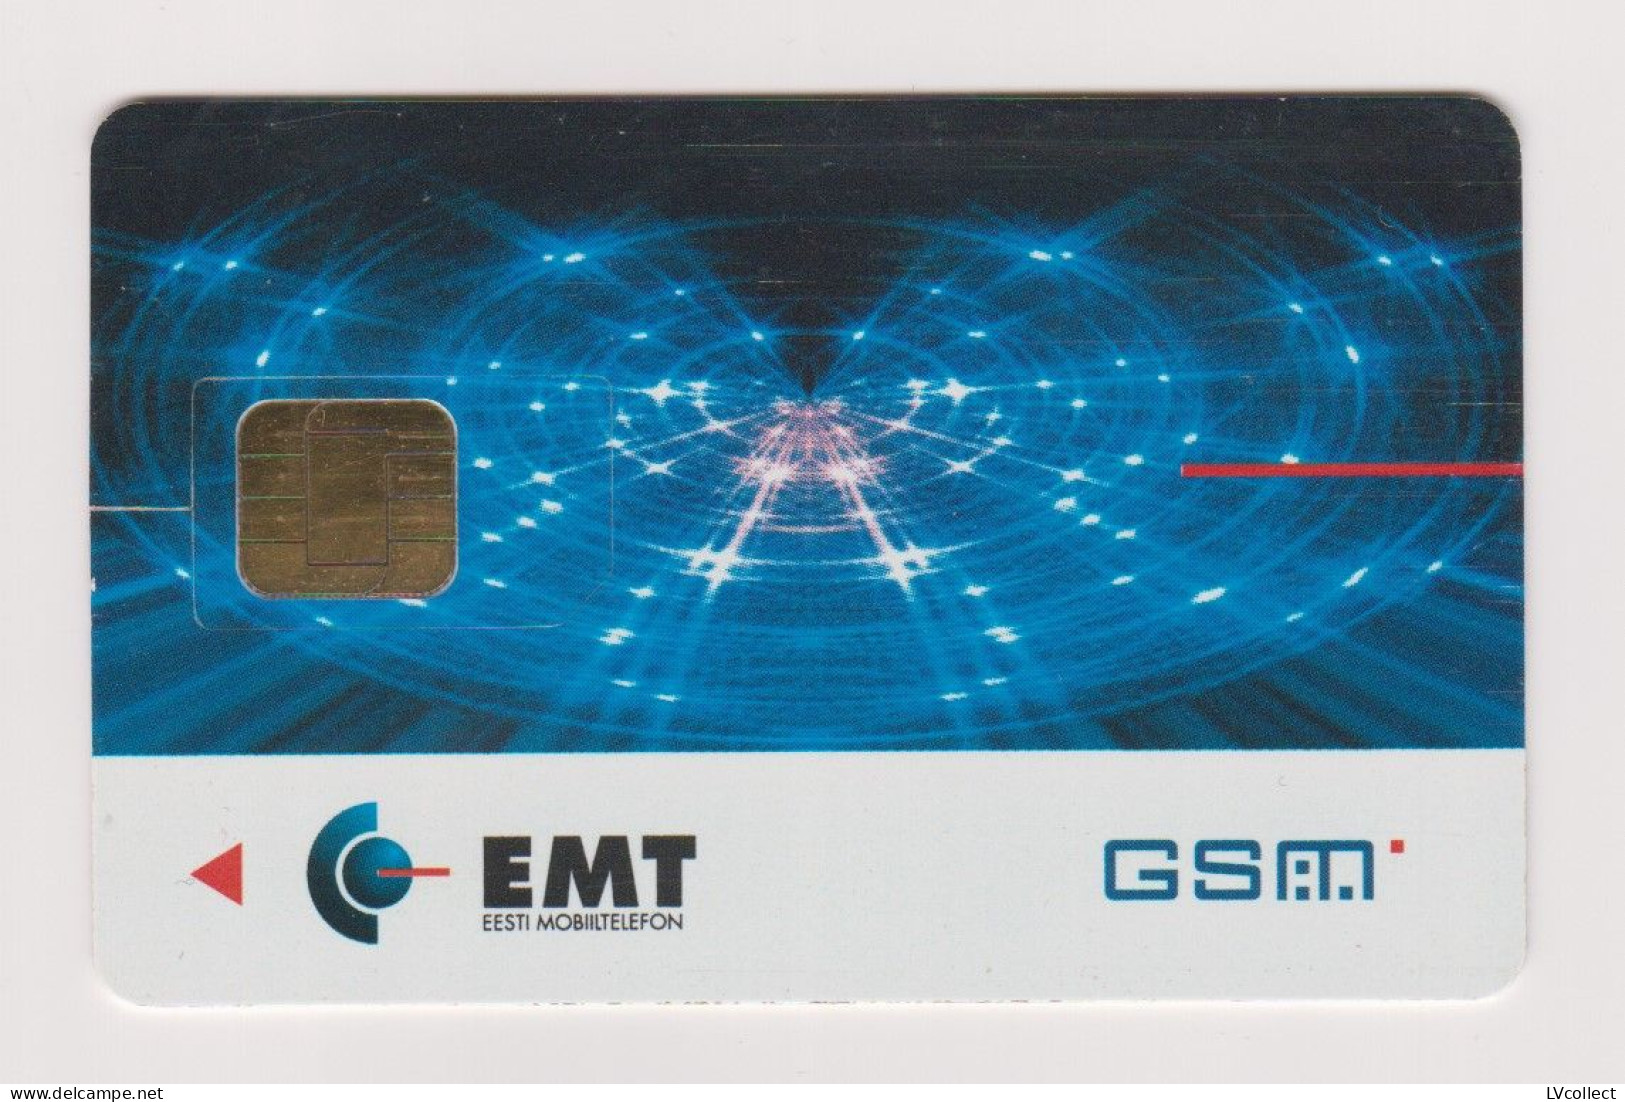 ESTONIA Old GSM SIM MINT! - Estonia